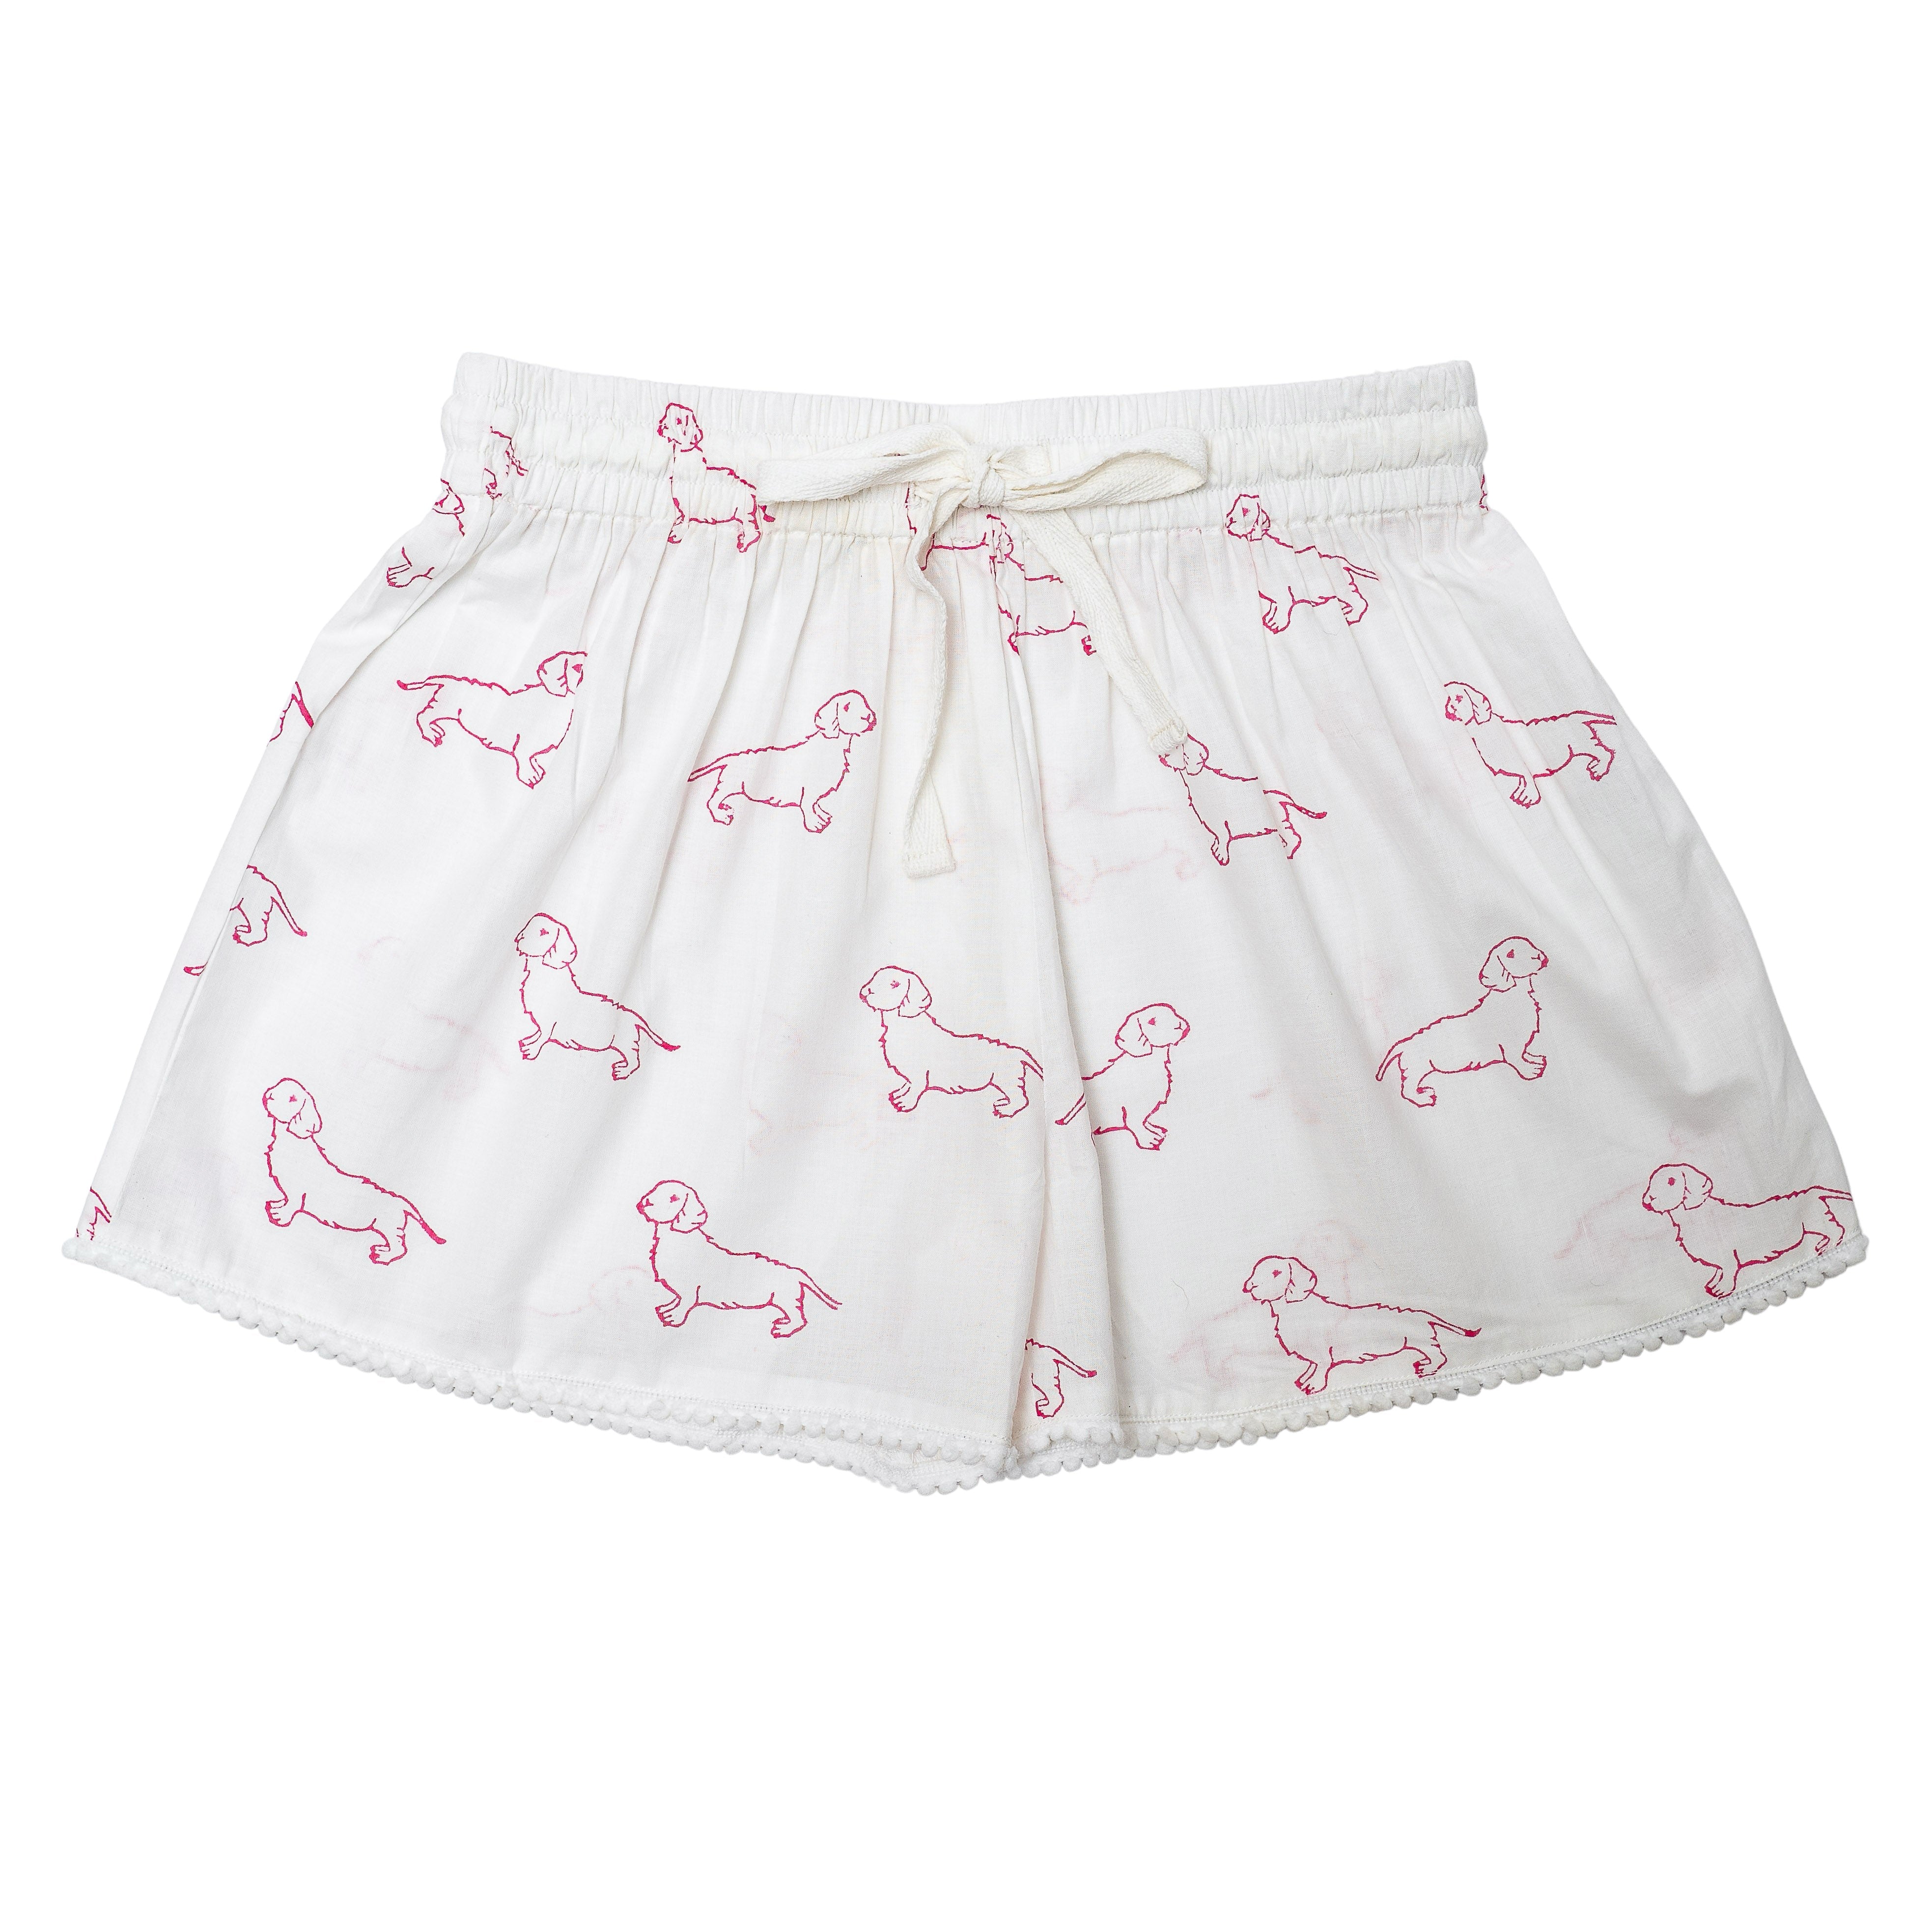 Dachshund Sleep Shorts (Pink)